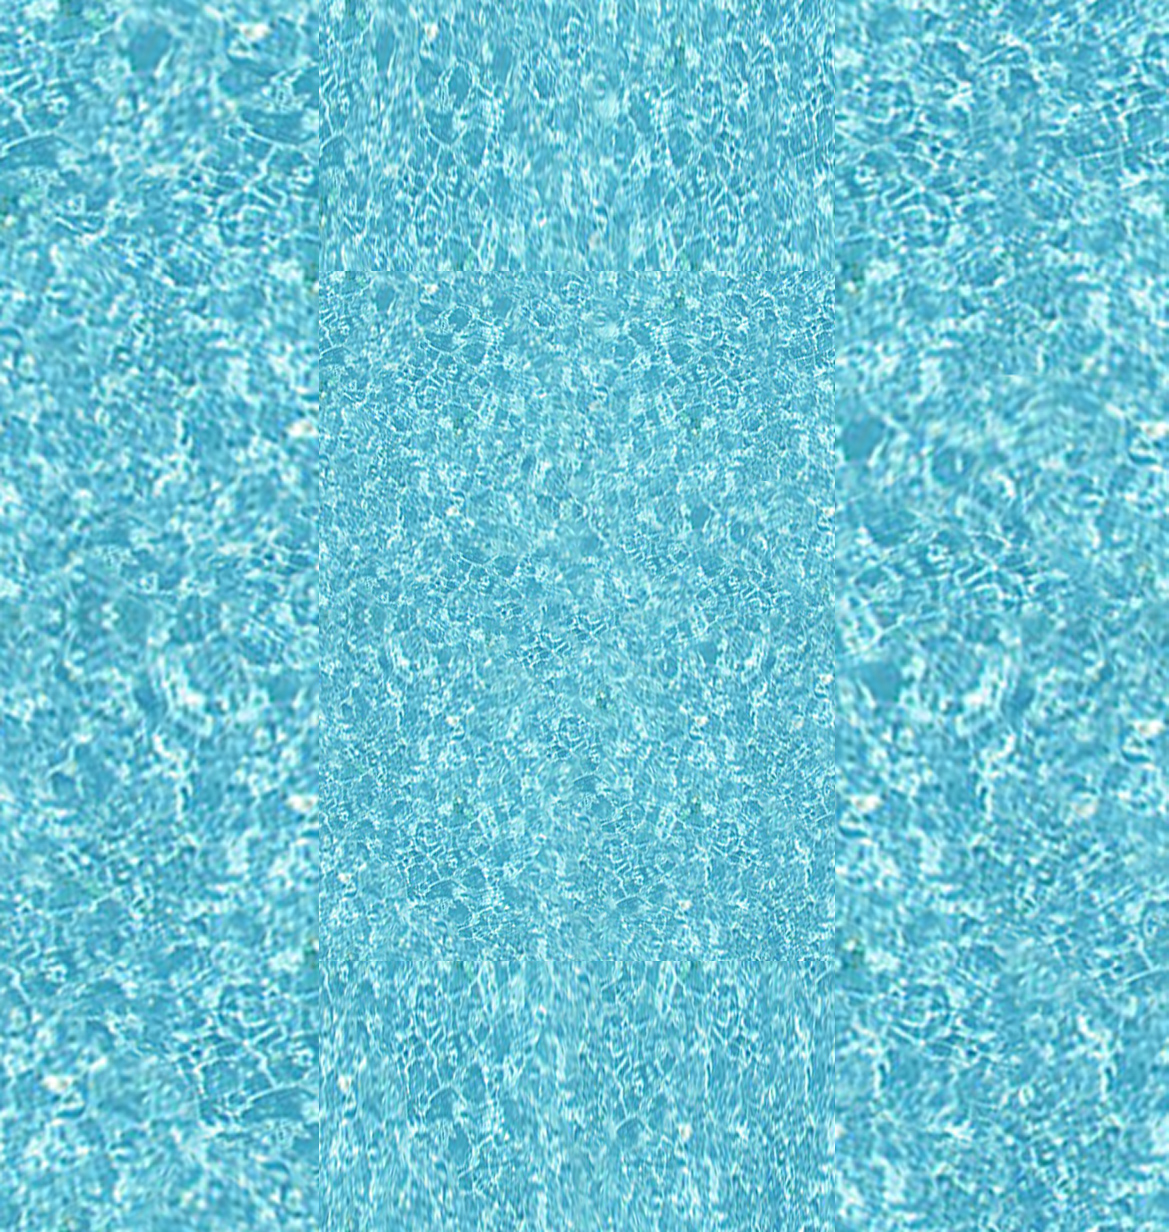 Pool-Caustics-Seamless-LG.jpg